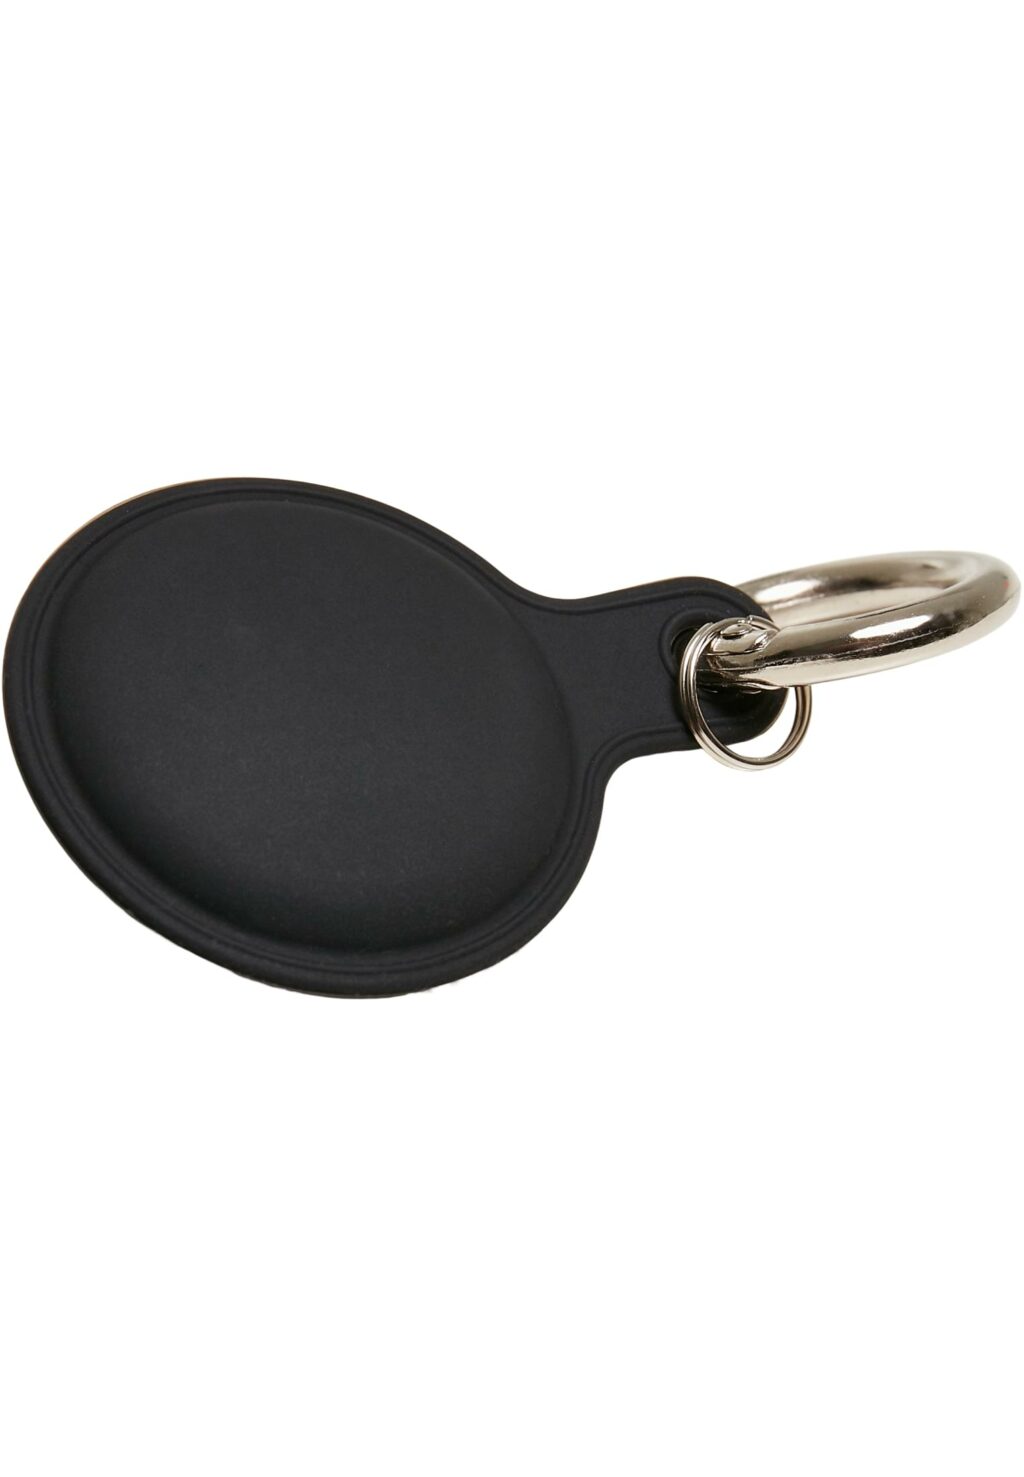 AirTag Keychain 3-Pack black/orange/darkmint one TB5188